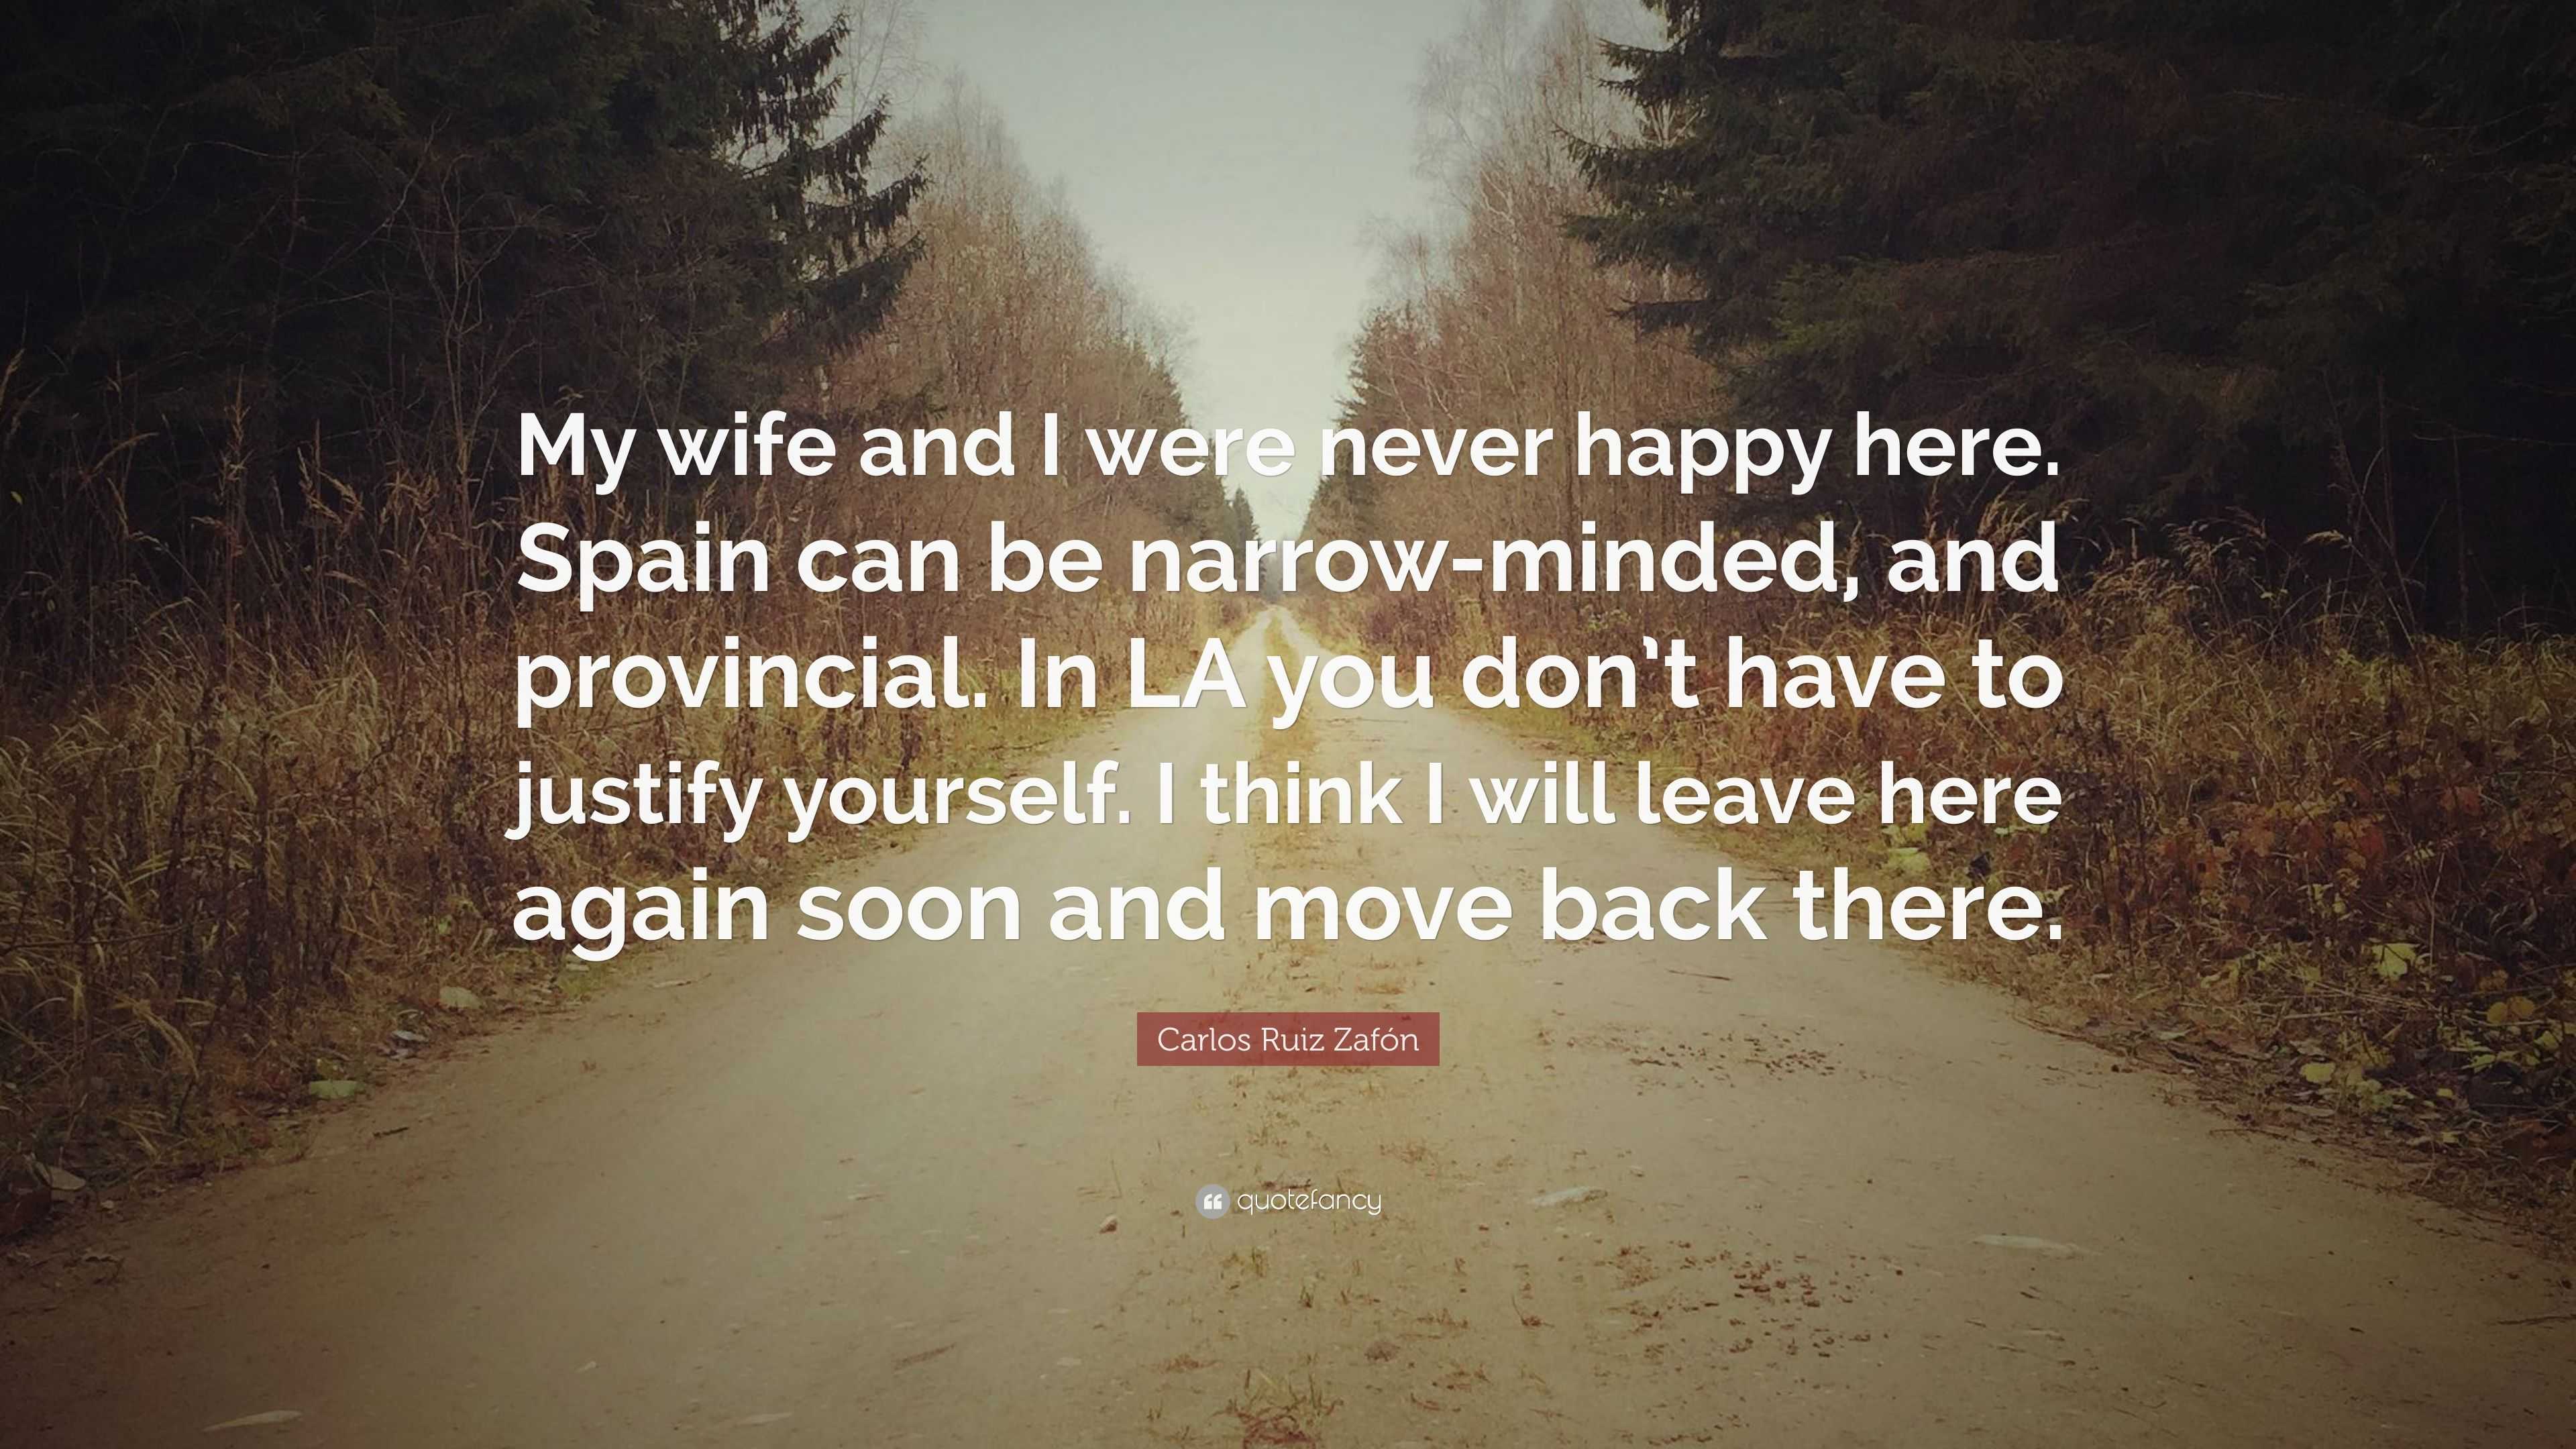 Carlos Ruiz Zafon quote: My wife and I were never happy here